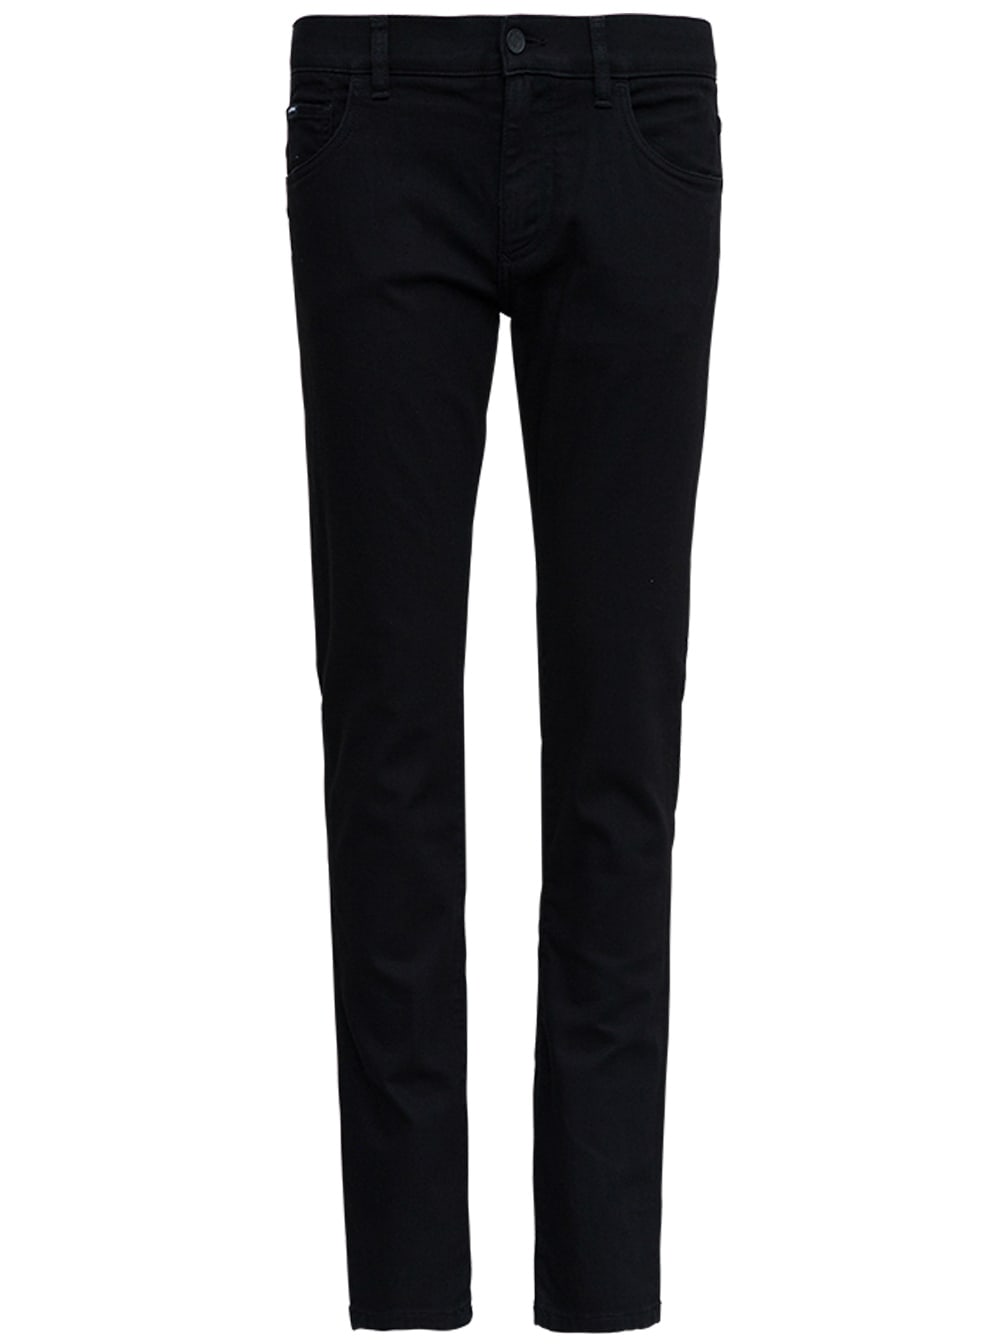 Dolce & Gabbana Essential Black Stretch Denim Jeans